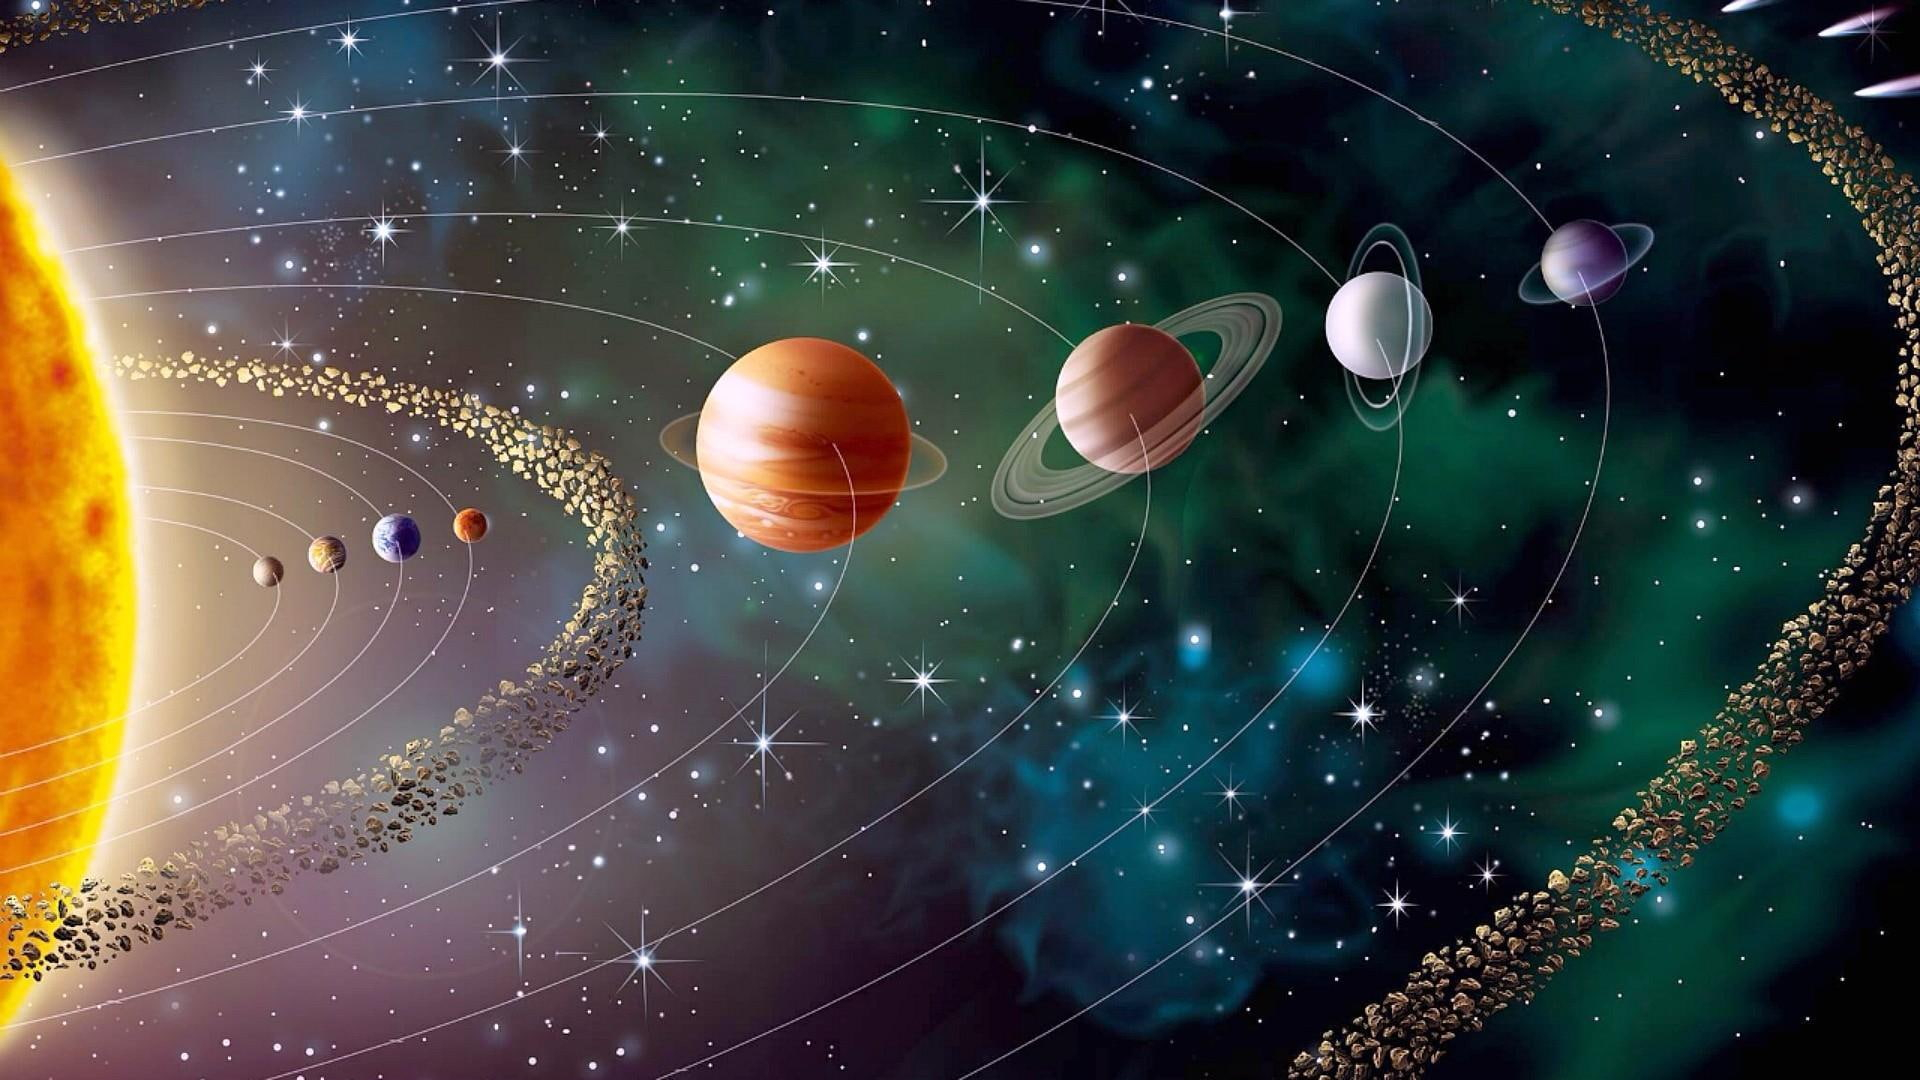 Solar system digital wallpaper, space, earth, sun, planets, universe